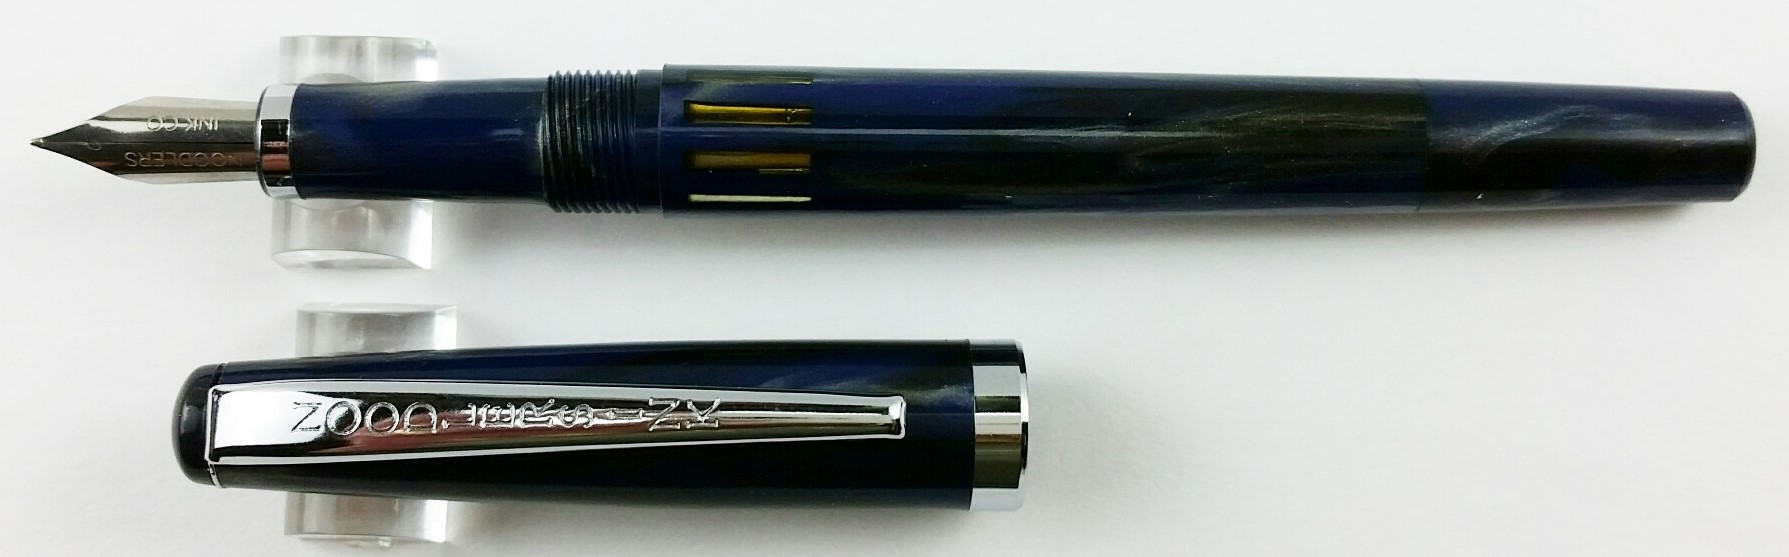 Zuni 17066 Noodler's Nib Creaper Standard Flex Fountain Pen